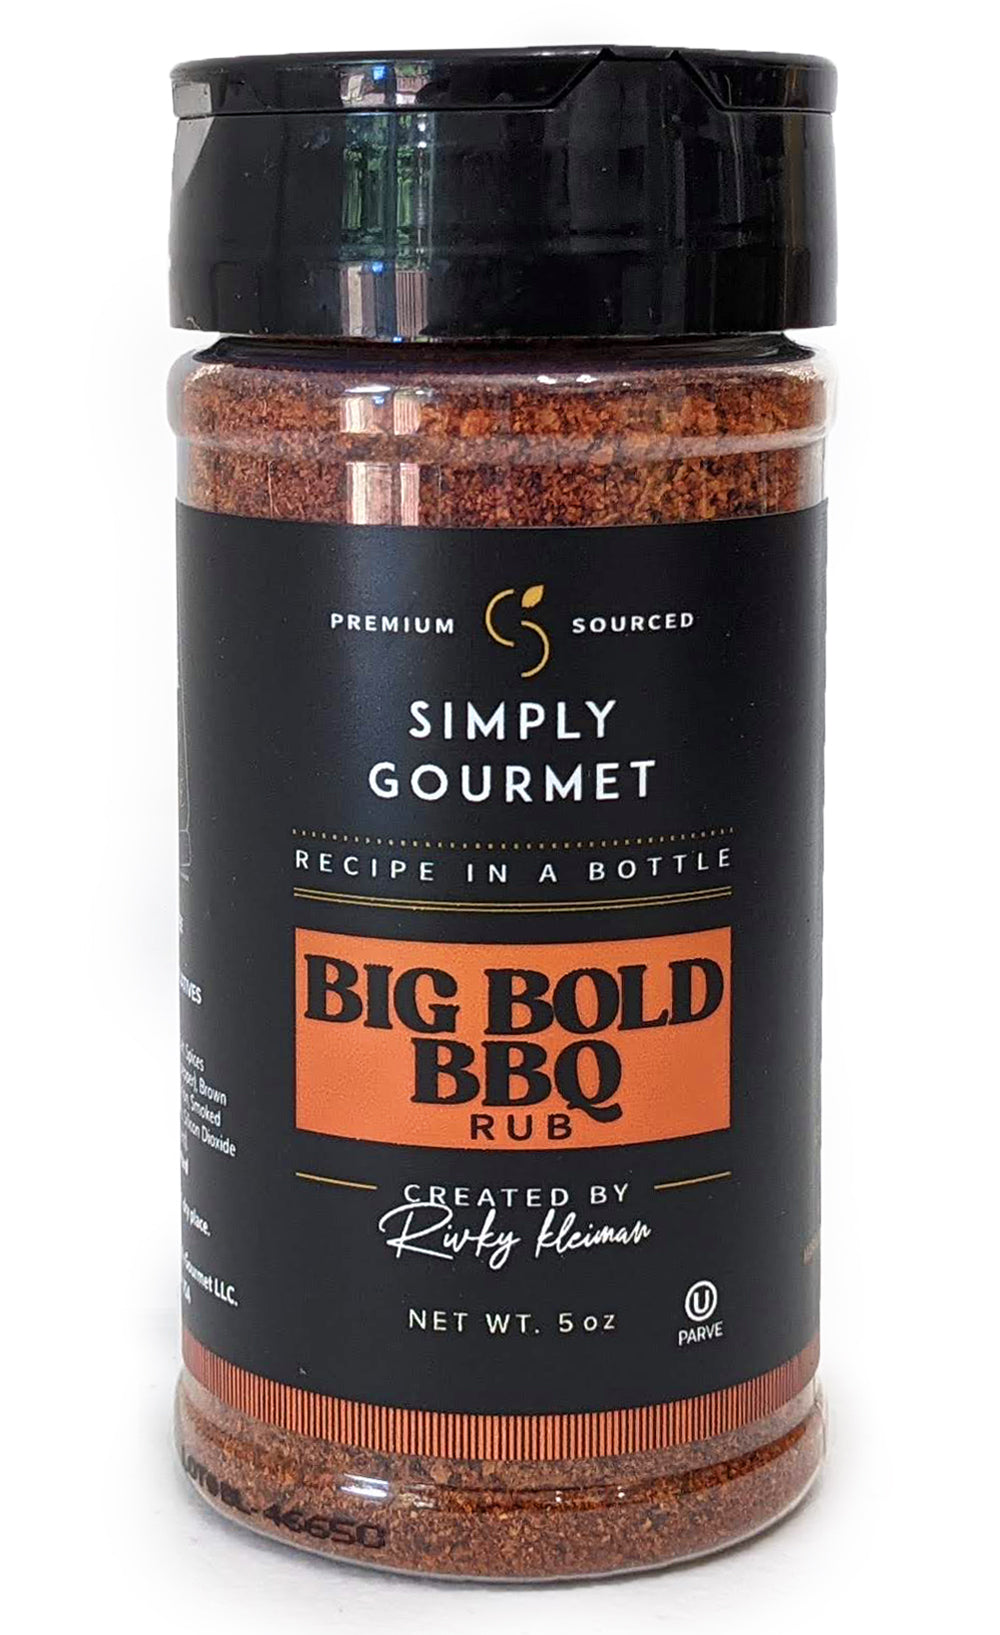 Simply Gourmet, Big Bold BBQ Rub, created by Rivky Kleiman